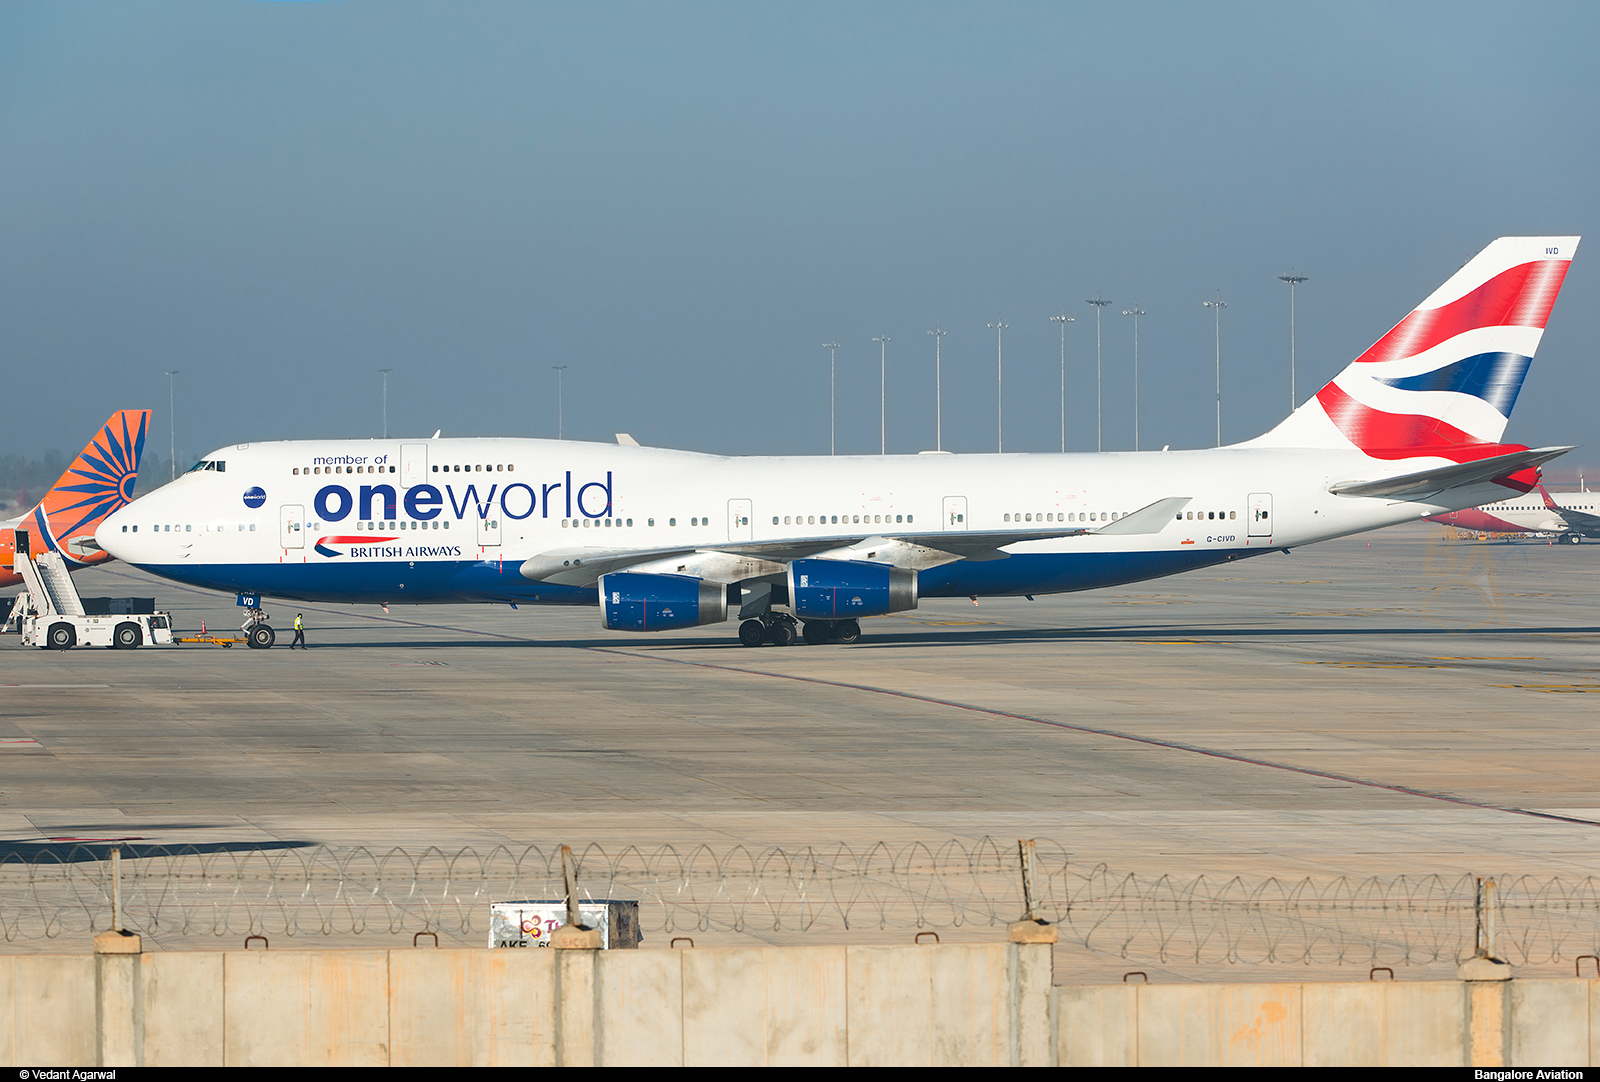 Plane spotting British Airways oneworld livery, Air Costa, IndiGo